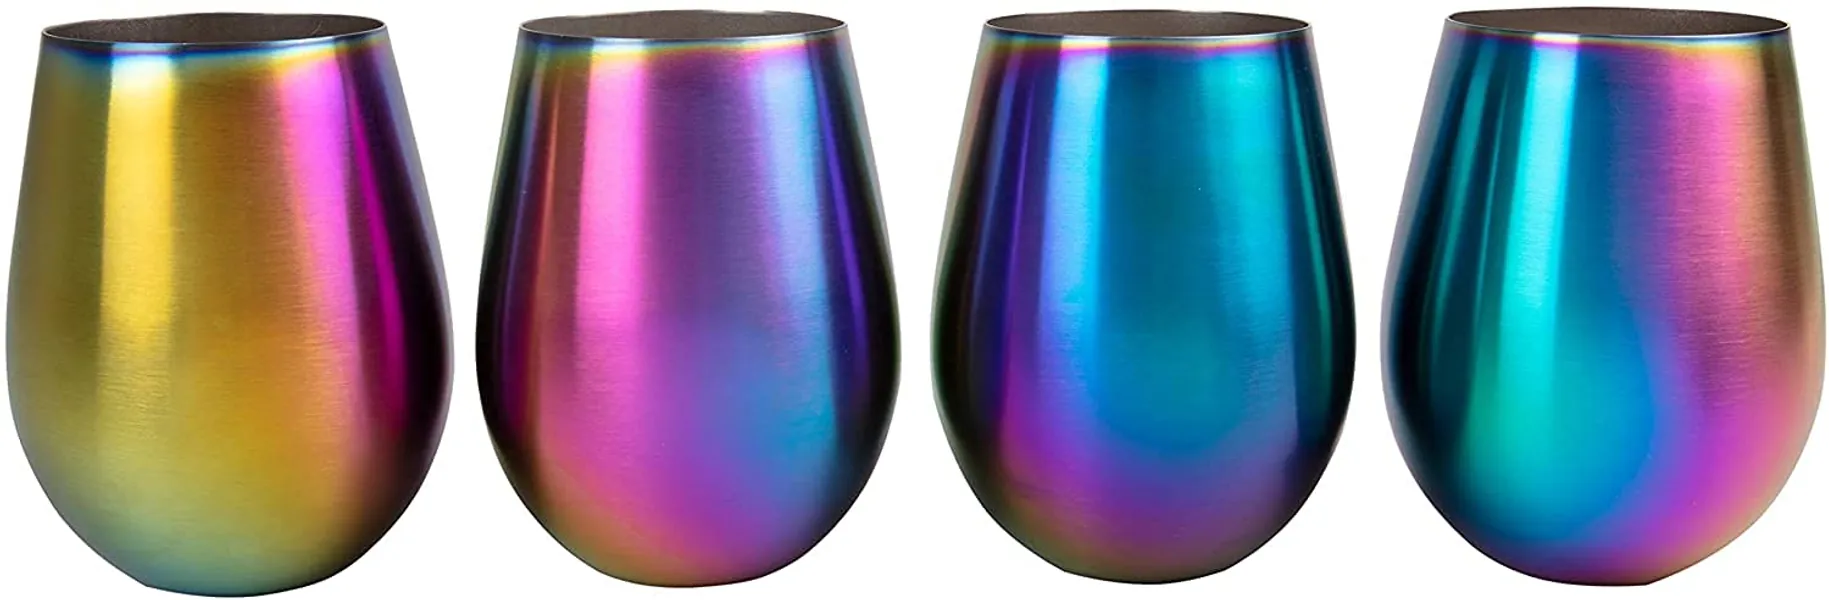 Deco Rainbow Stainless Steel Stemless BPA Free Wine Glasses, Set of 4 Unicorn Cups, 16oz - 